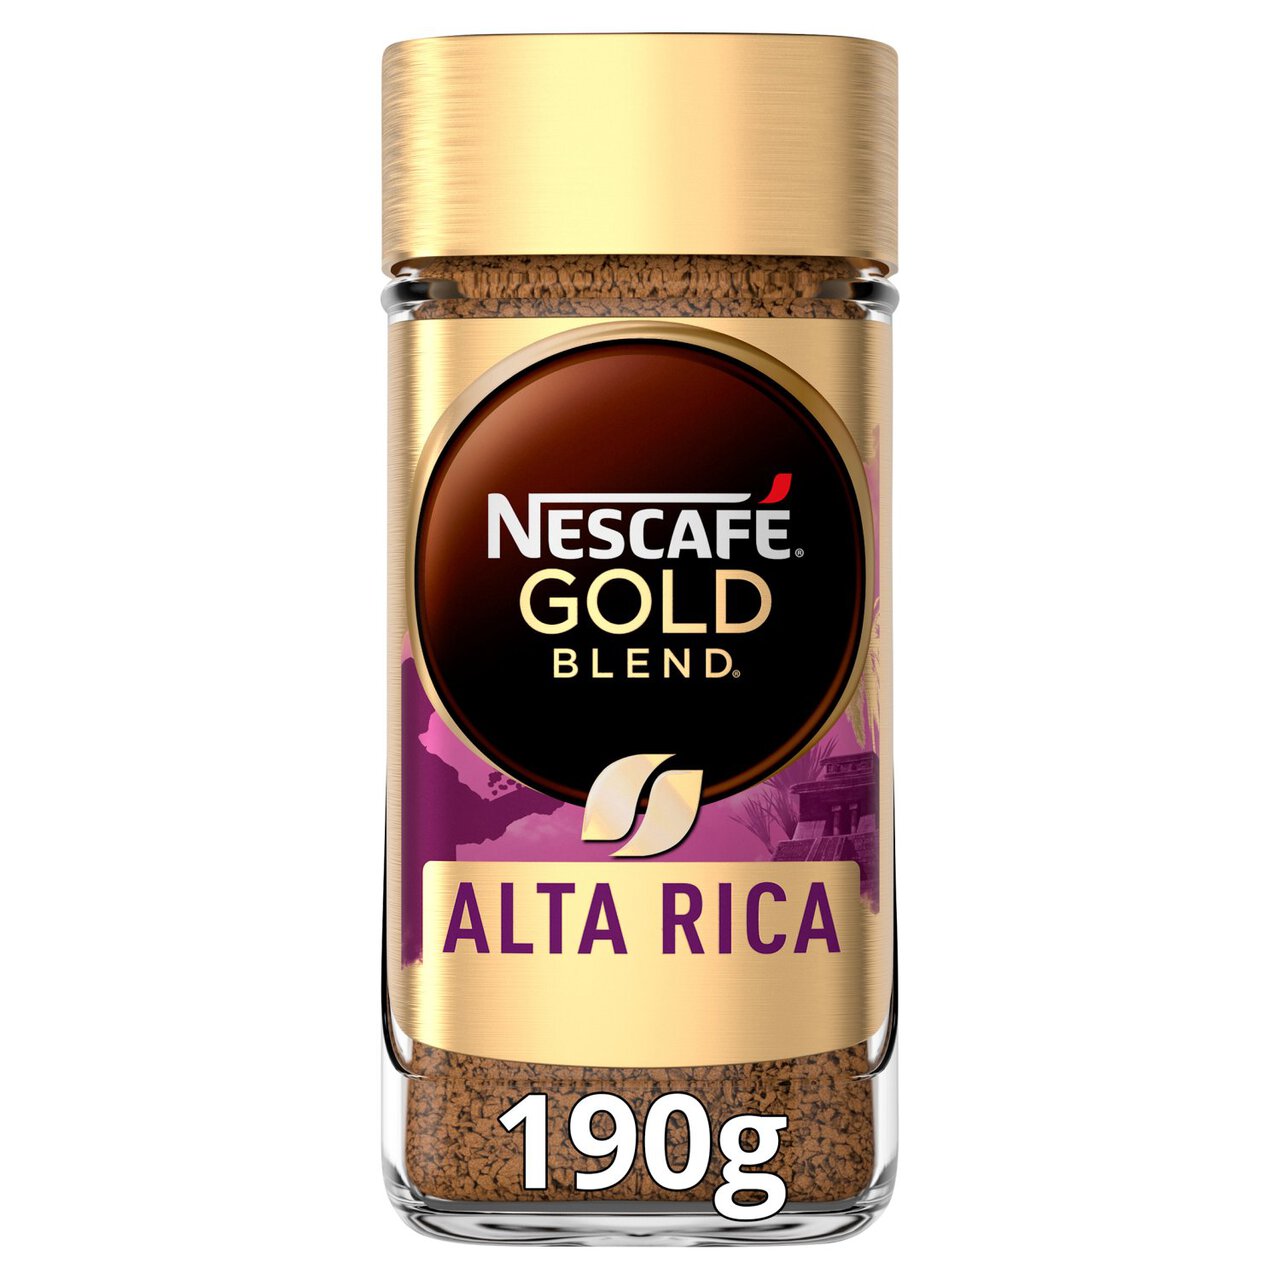 Nescafe Gold Alta Rica Jar 190g